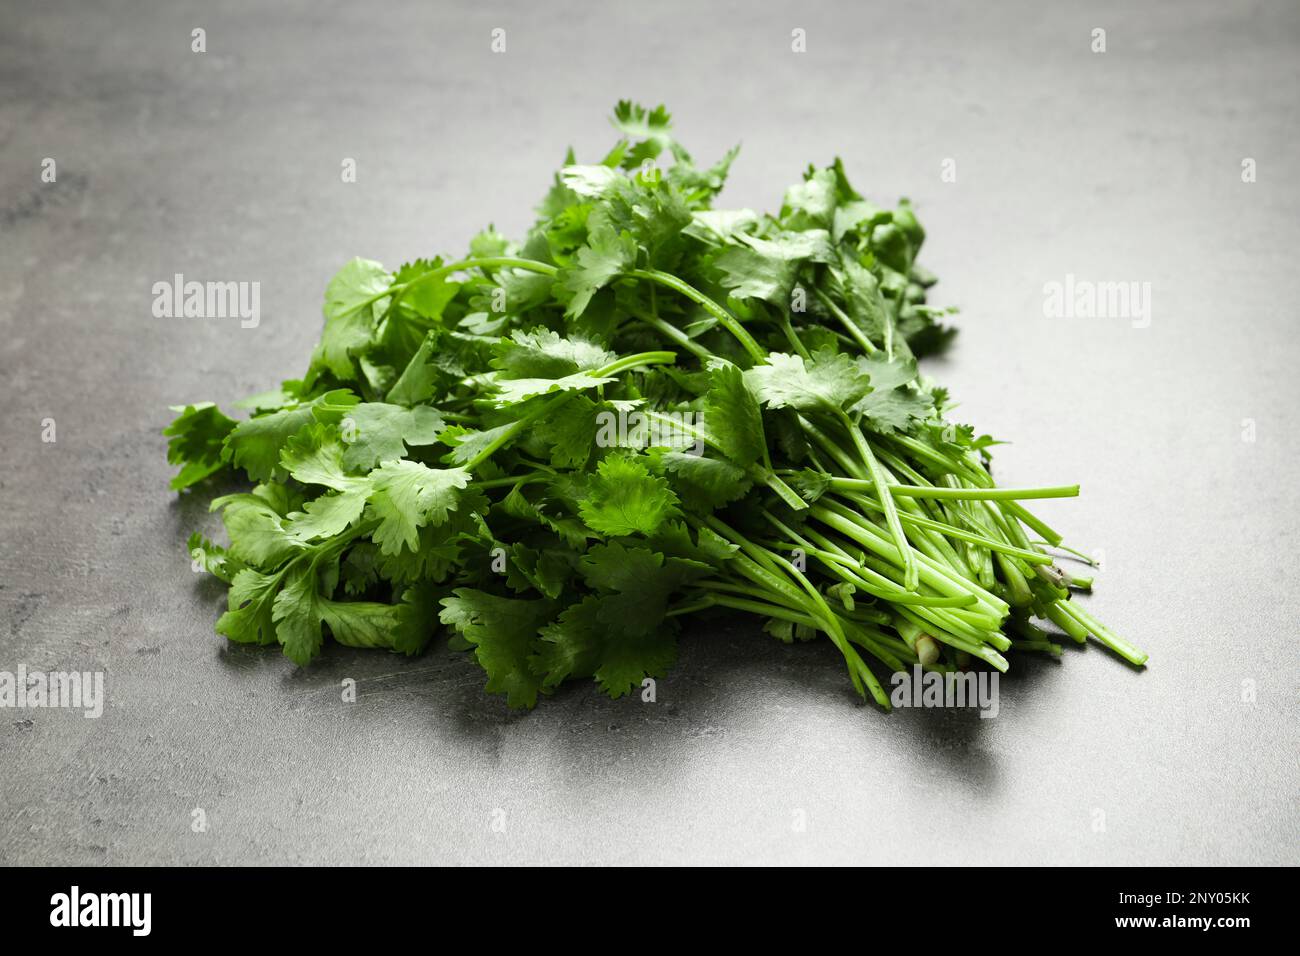 Bunch of fresh green cilantro on grey table Stock Photo